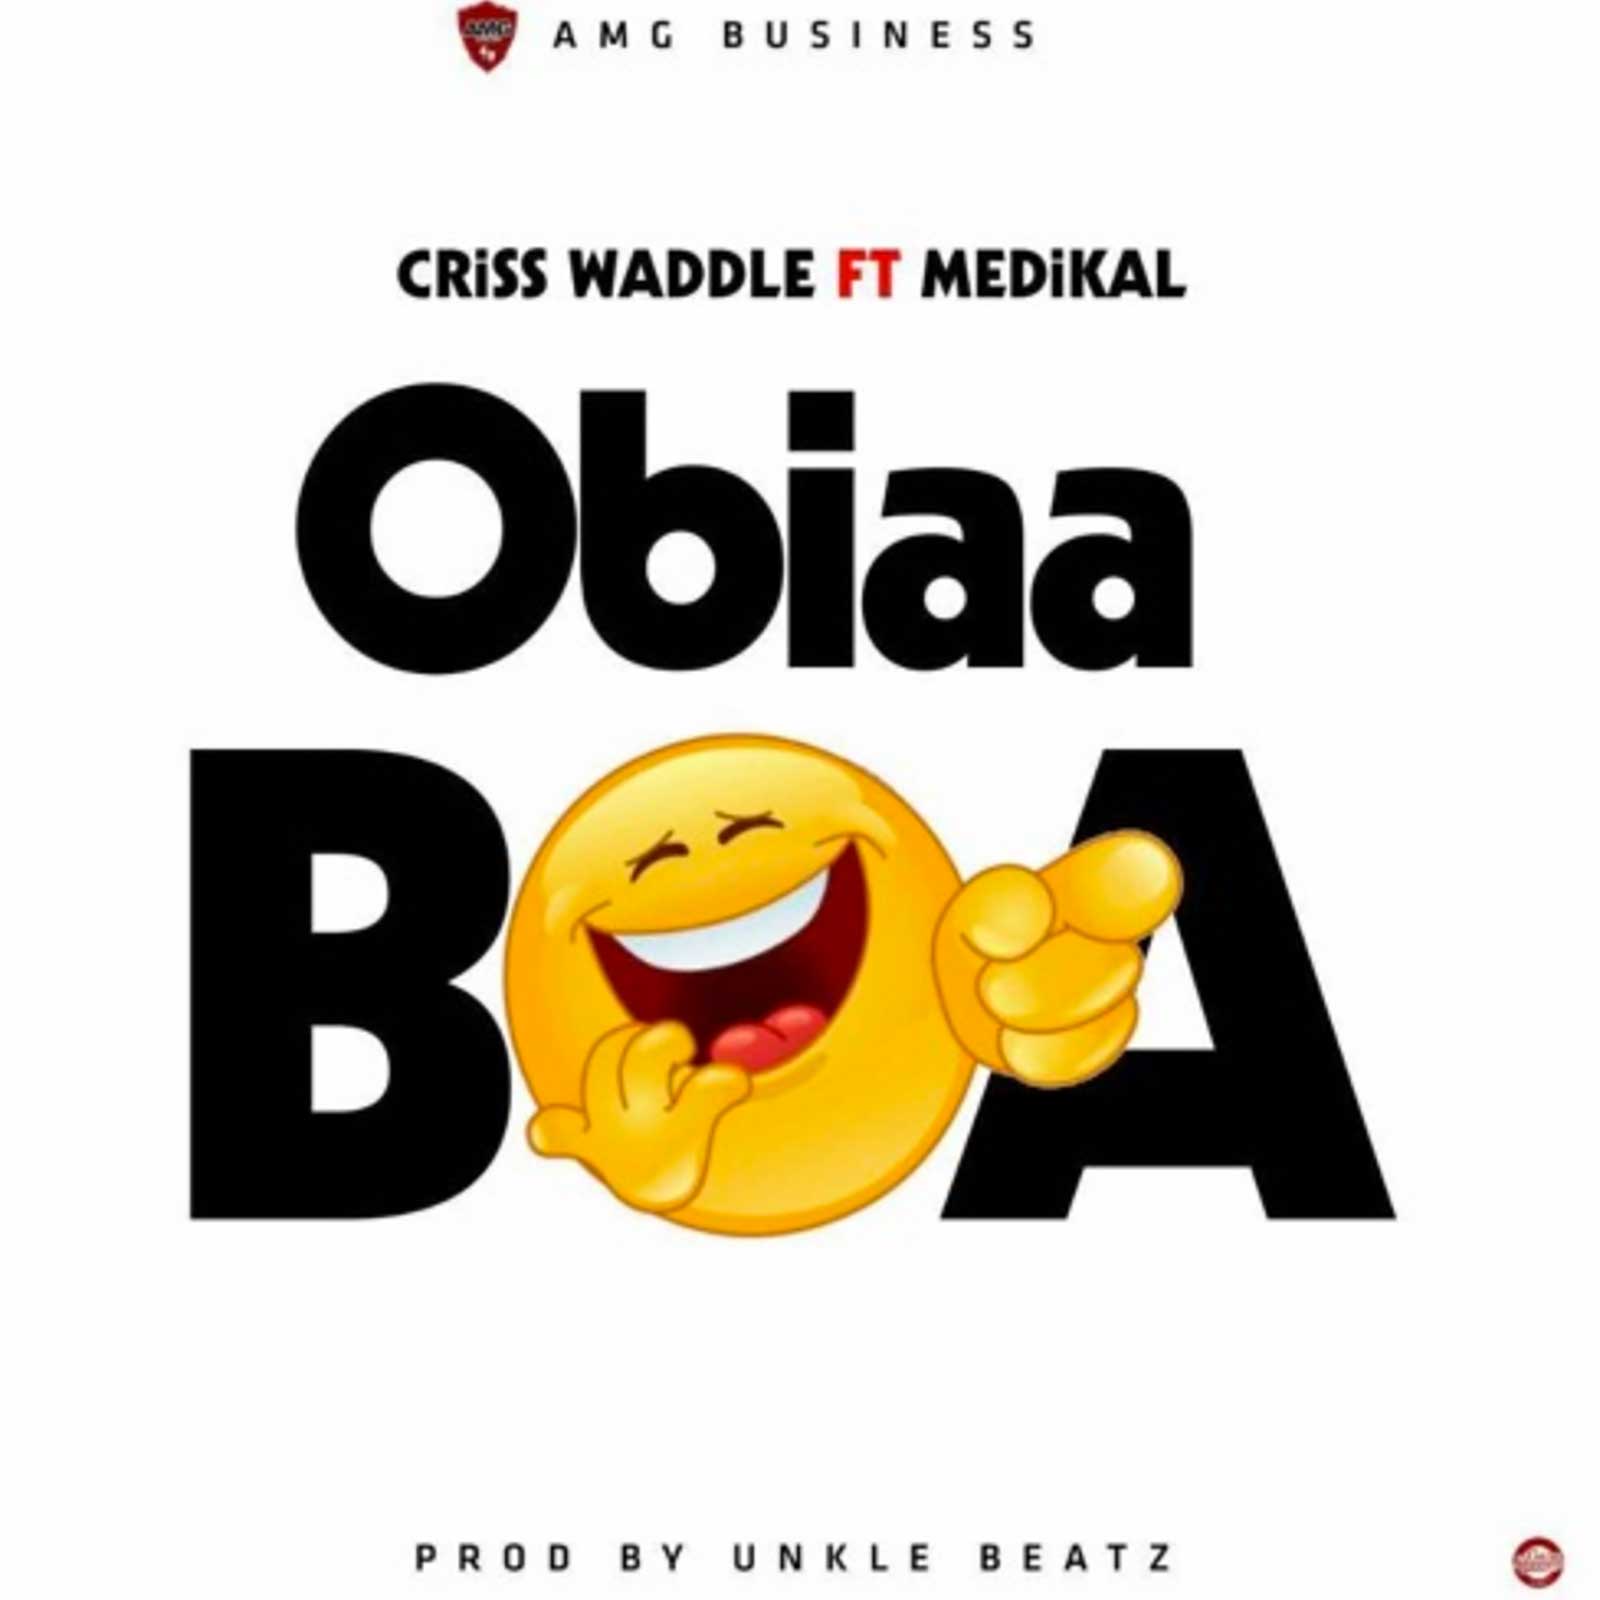 Obiaa Boa by Criss Waddle feat. Medikal